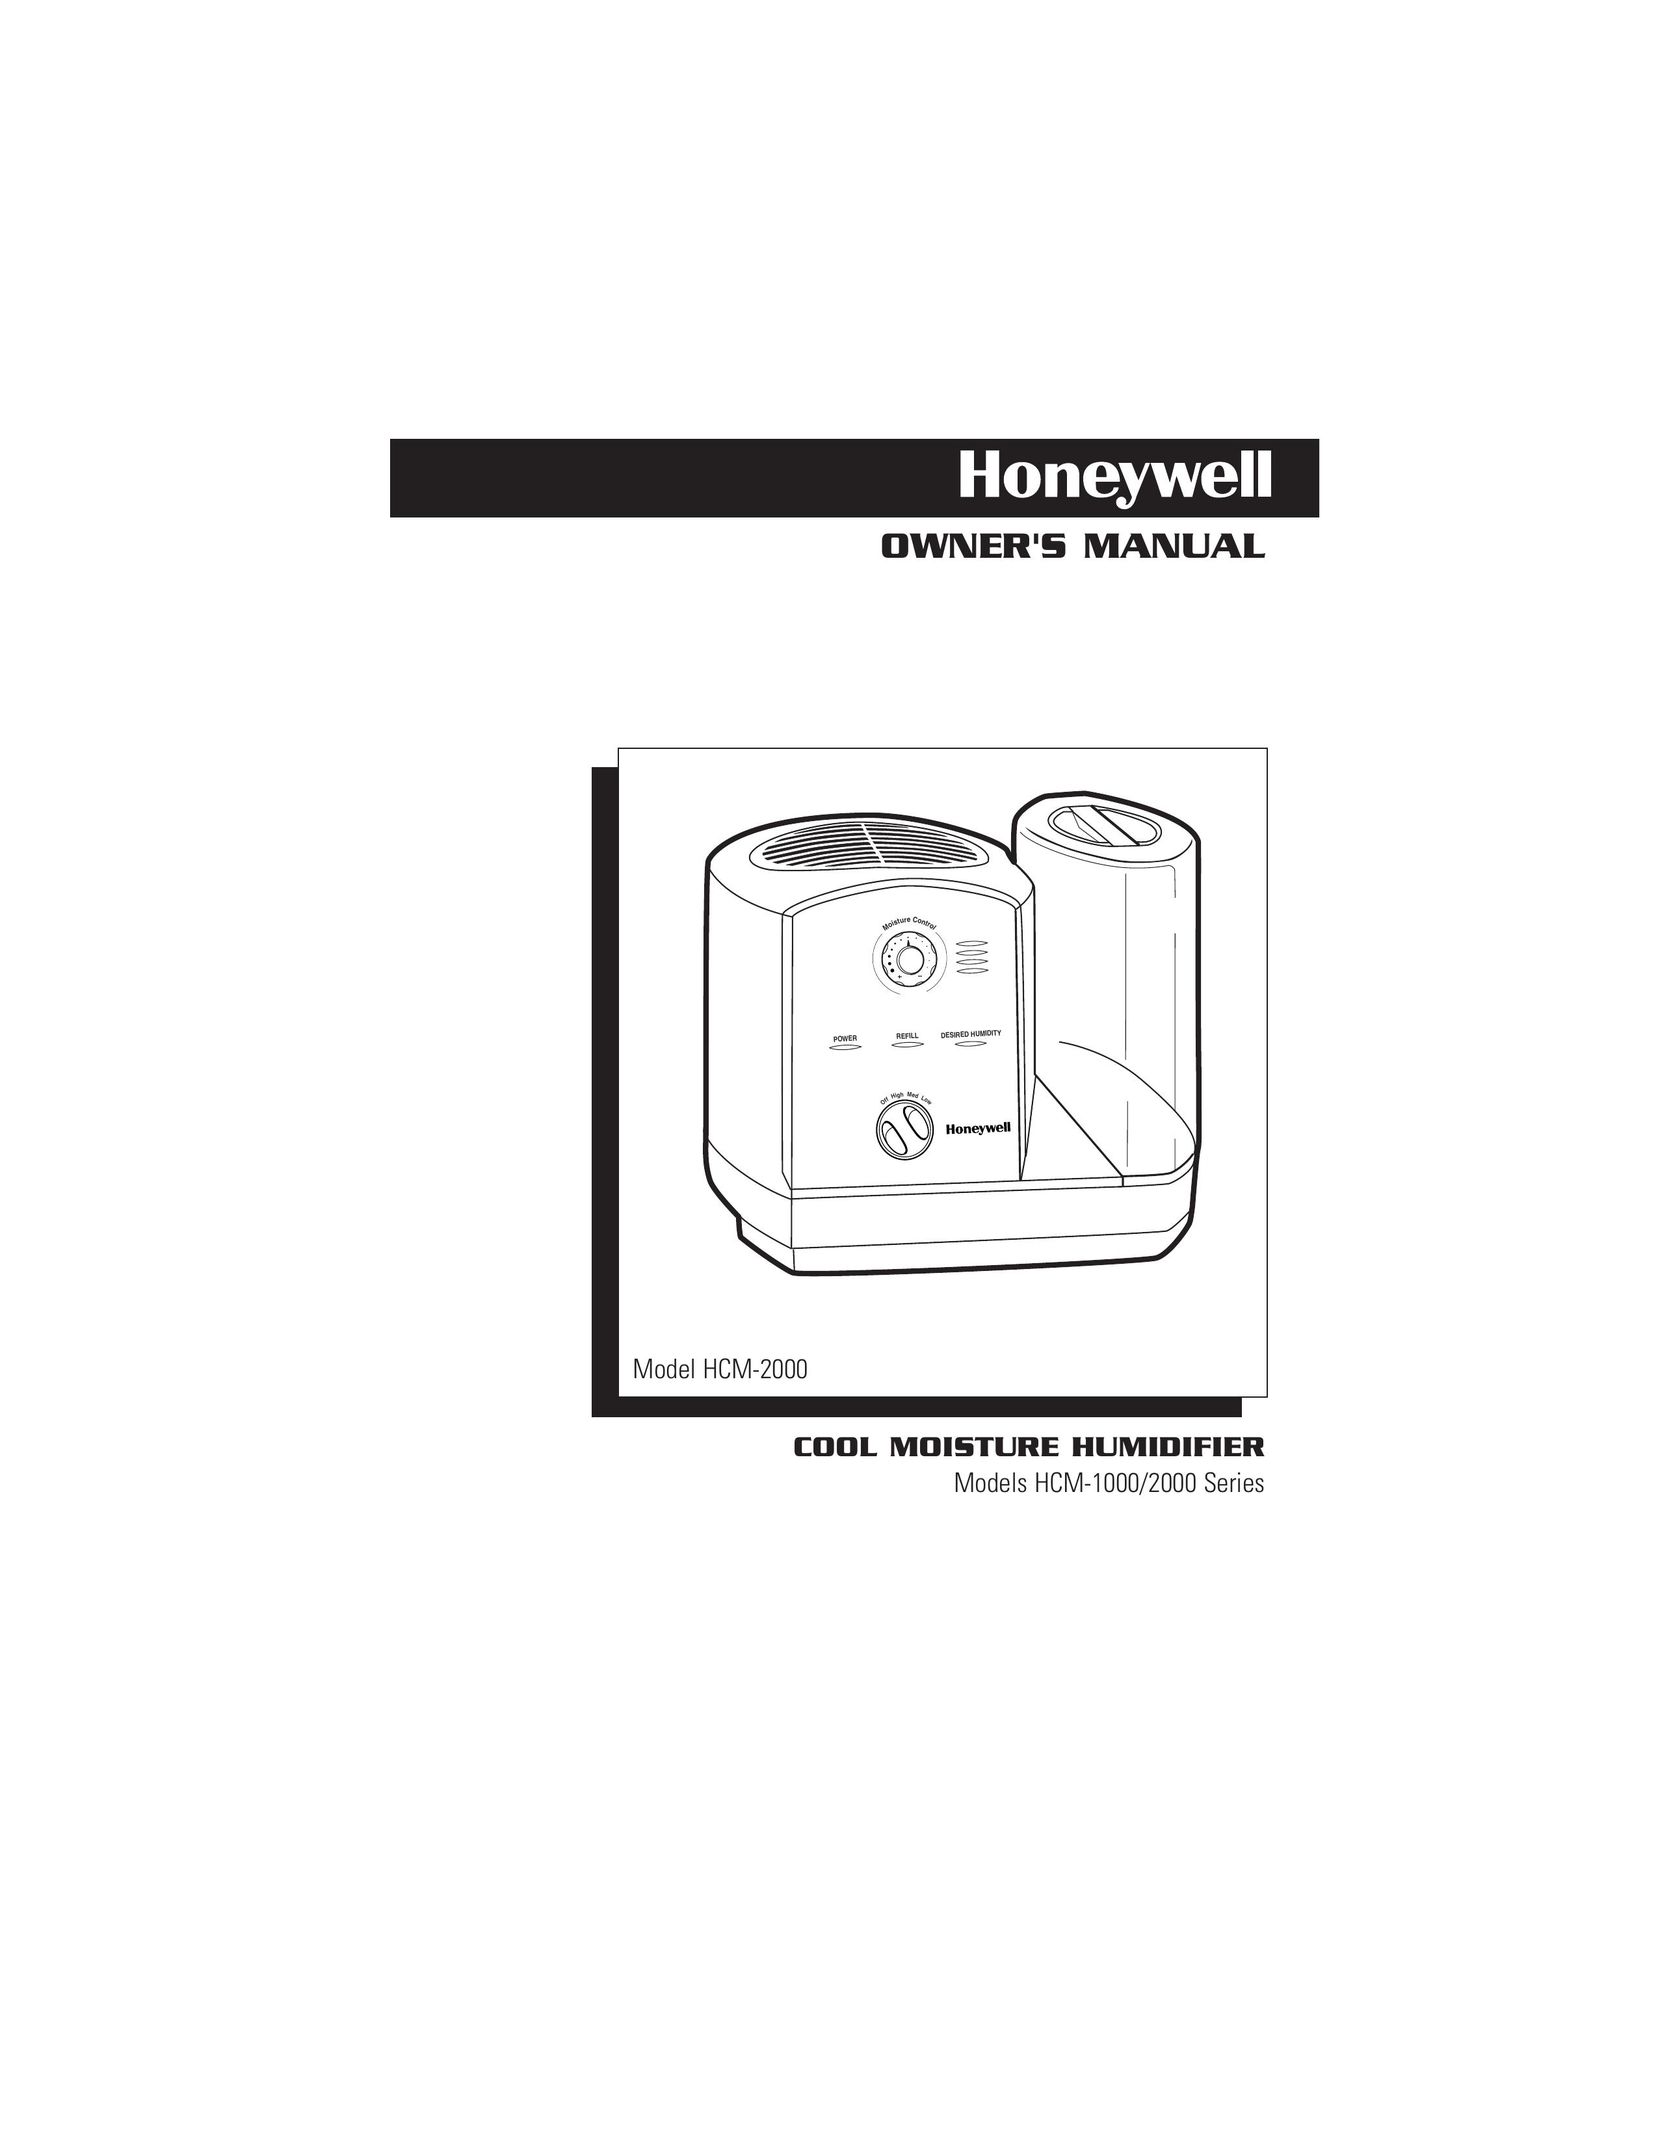 Honeywell HCM-2000 Humidifier User Manual